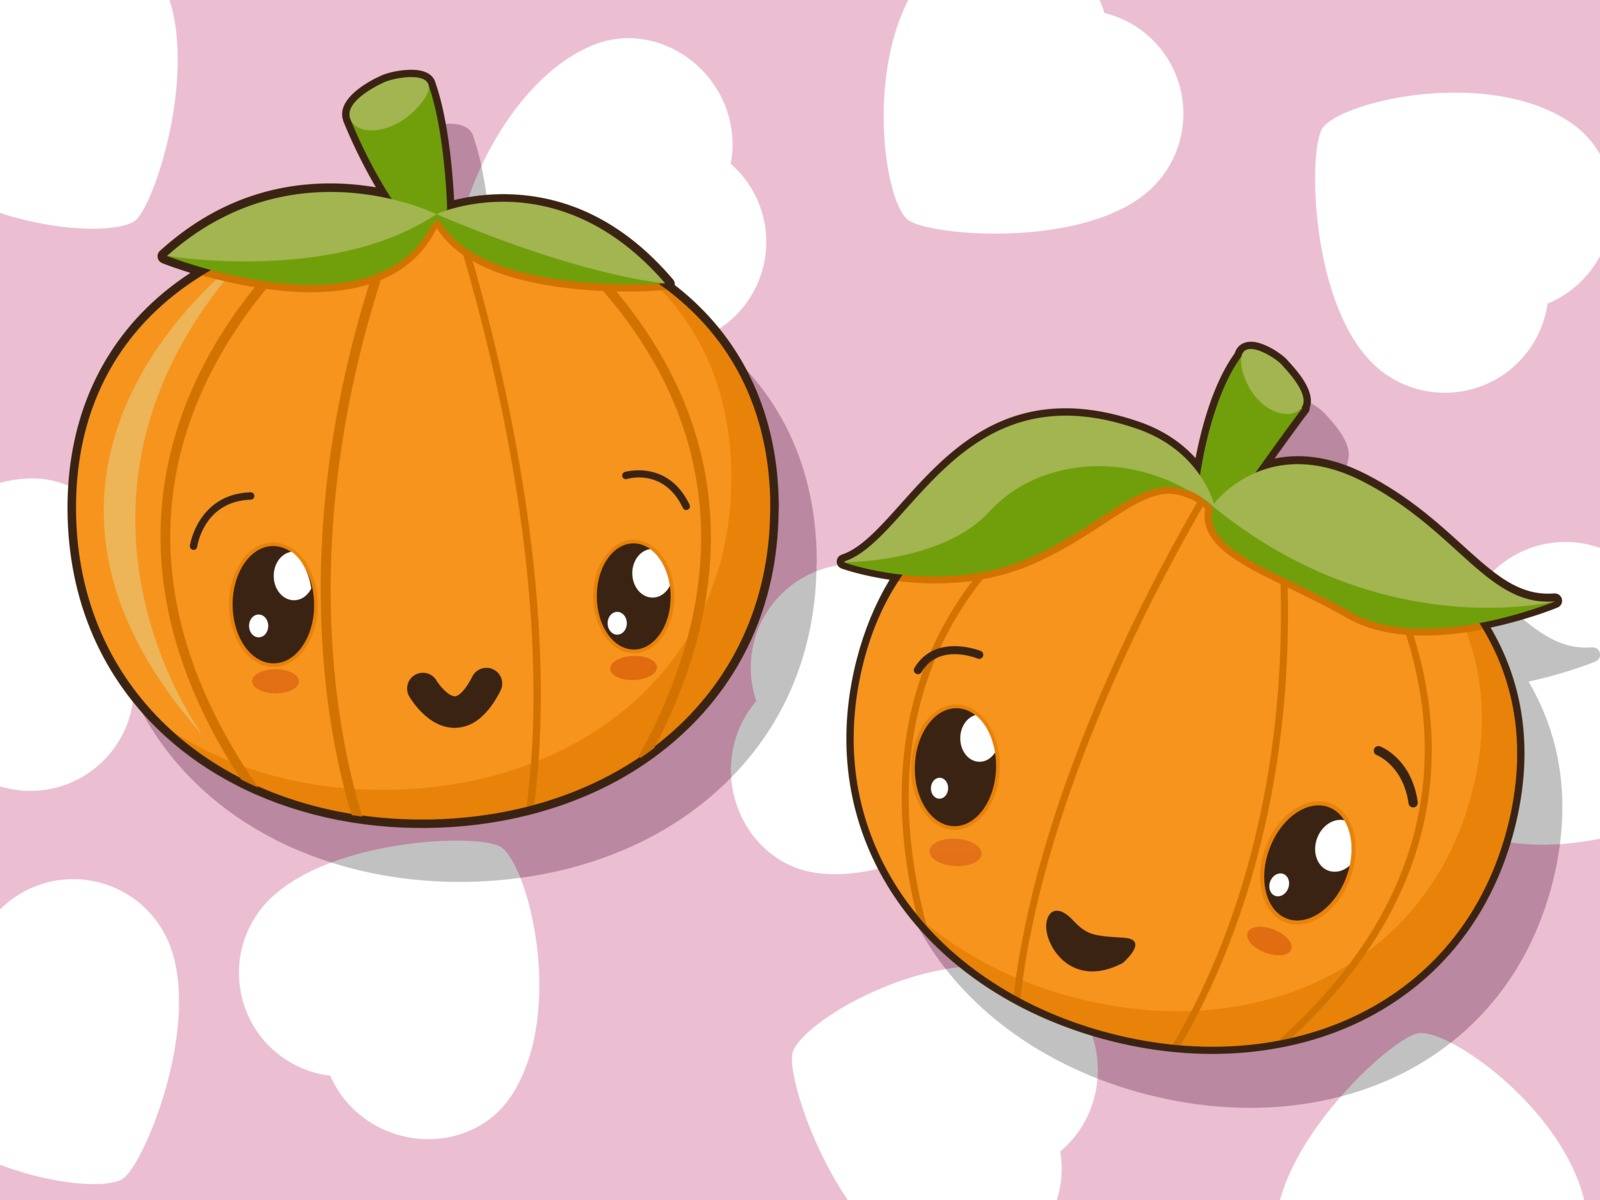 Kawaii pumpkin icons by Lirch